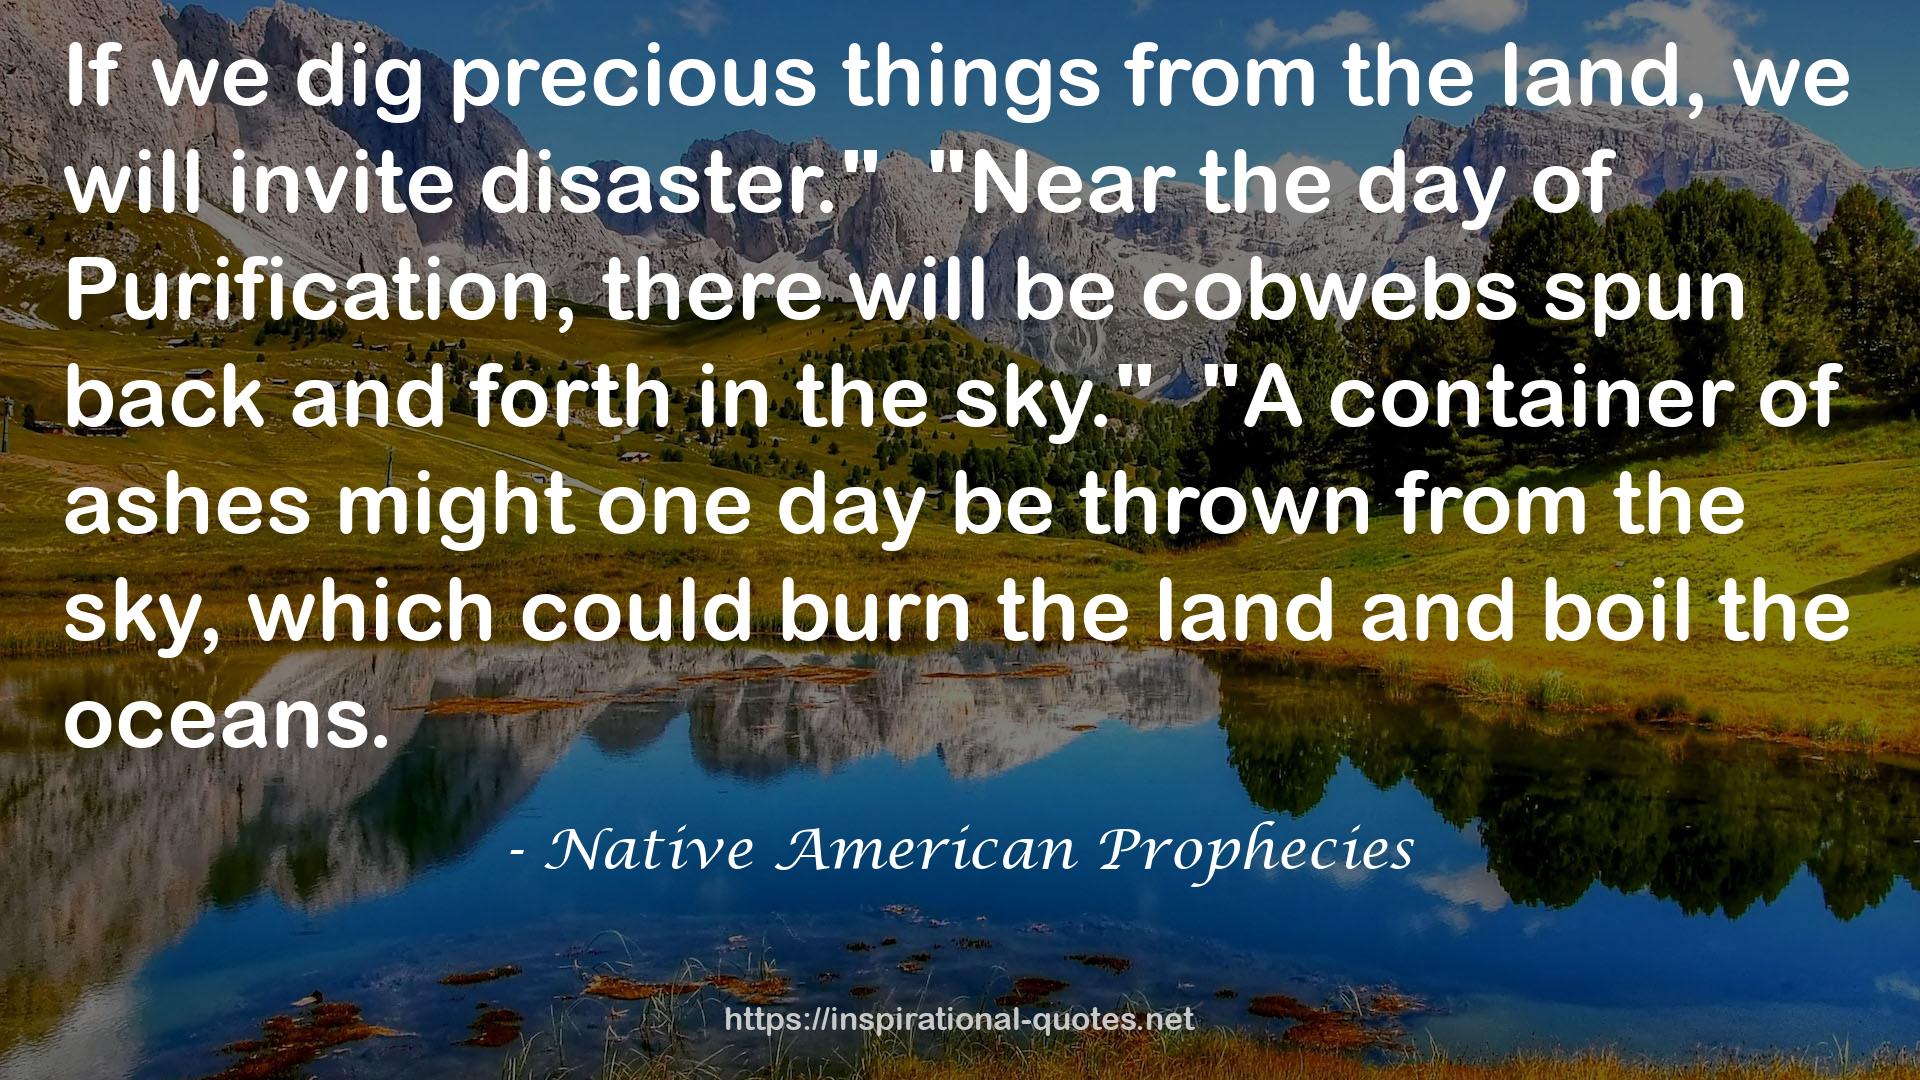 Native American Prophecies QUOTES